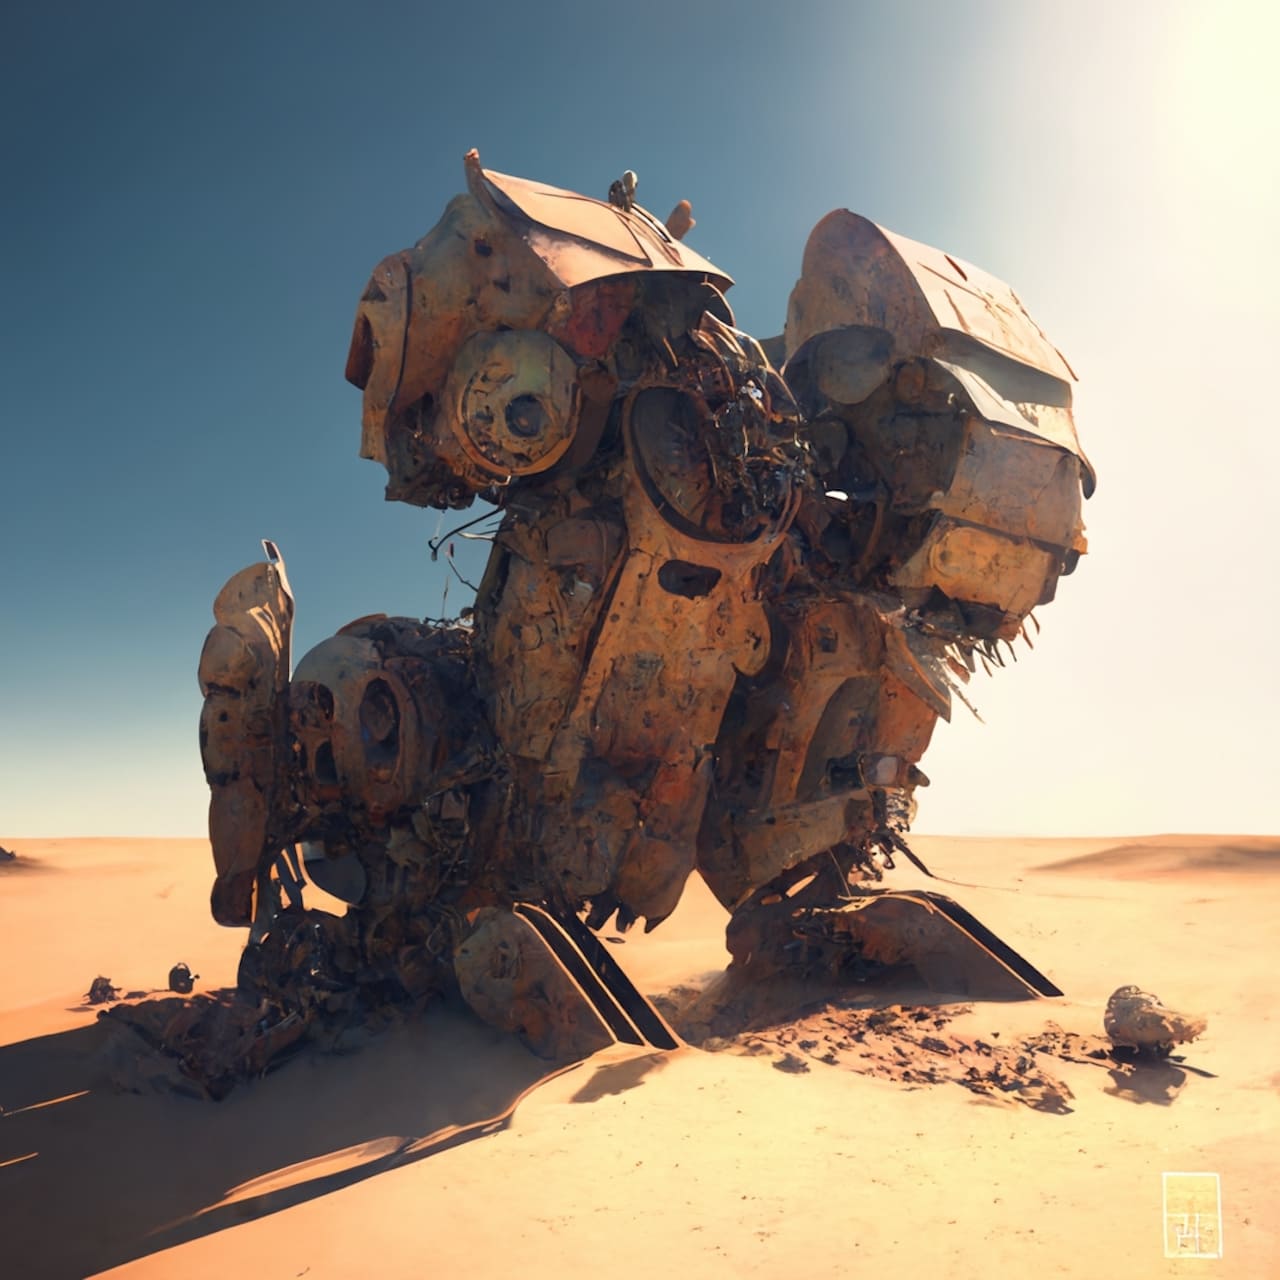 Tanuki remains of combat robots abandoned on desert planet rust